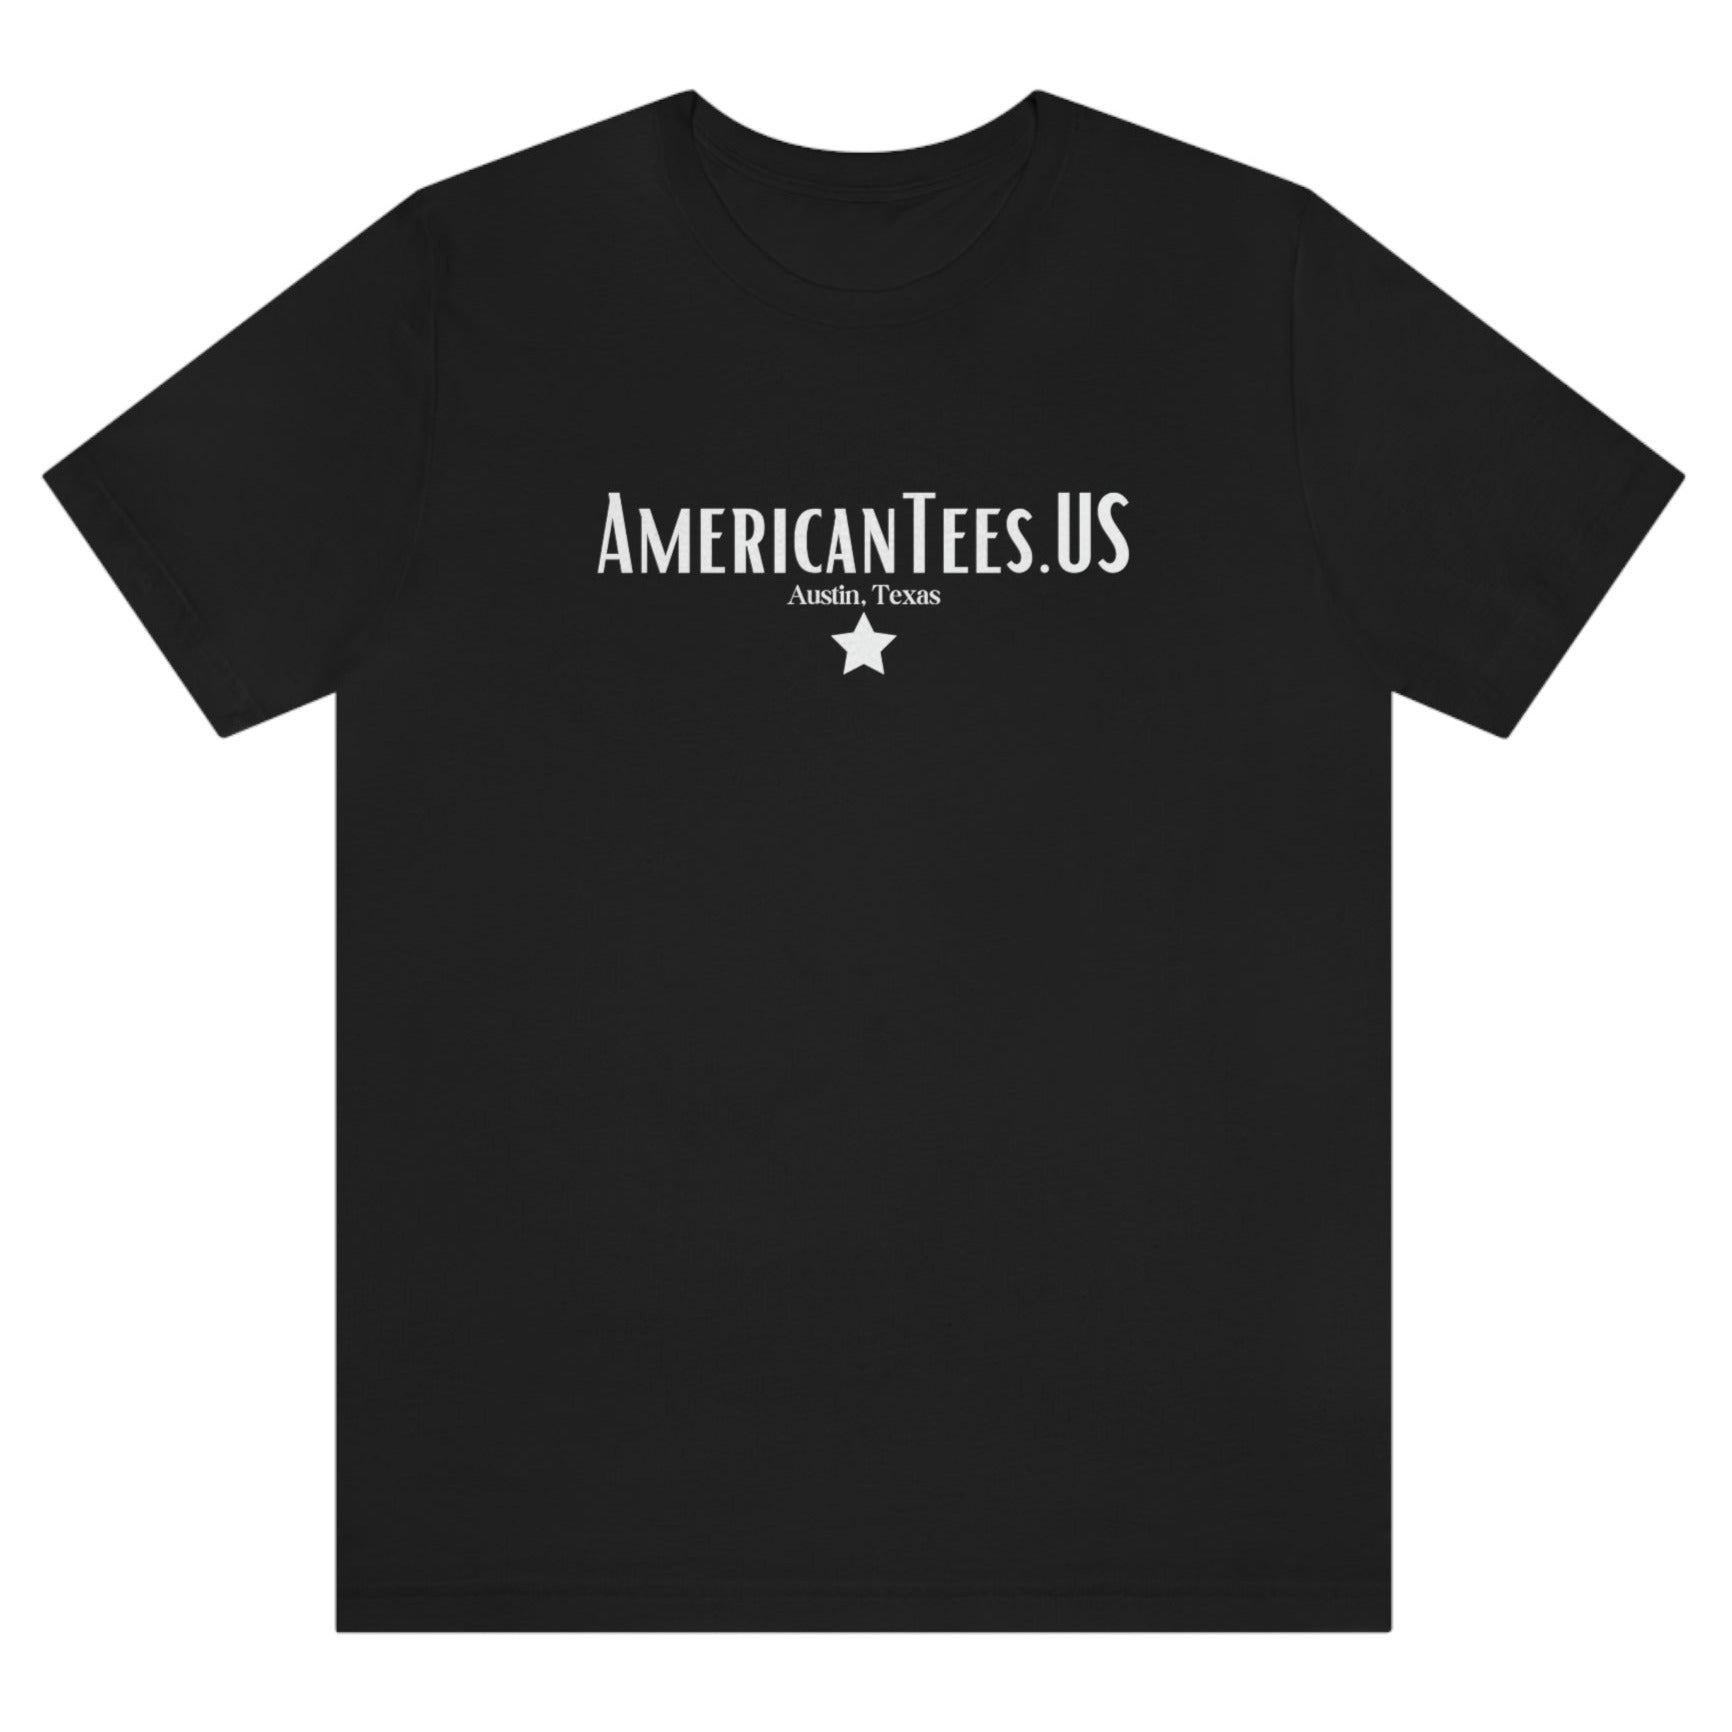 americantees-us-austin-tx-black-t-shirt-unisex